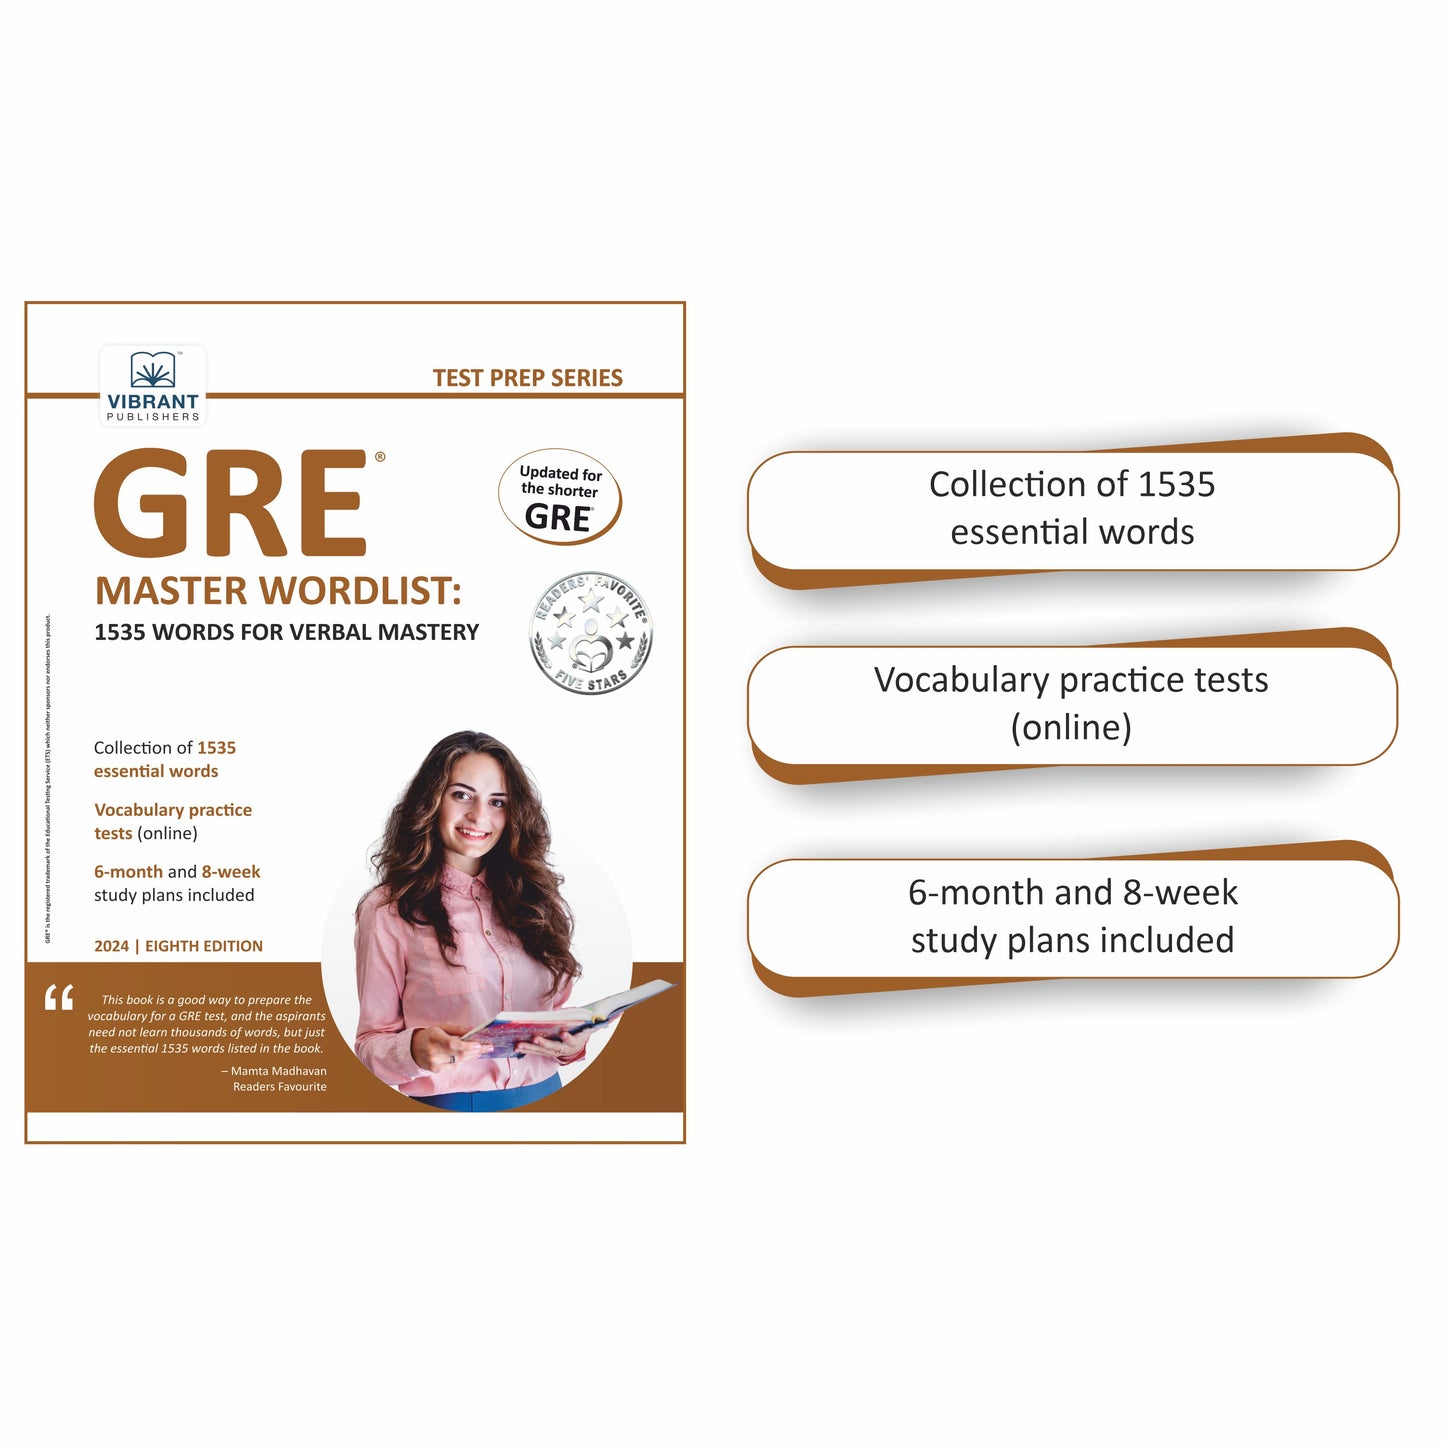 GRE CRASH COURSE - Master Wordlist: 1535 Words + Quantitative Reasoning + Verbal Reasoning Supreme + 10 GRE Practice Tests + FLASH CARDS by THE BIG CD - Test Prep Series